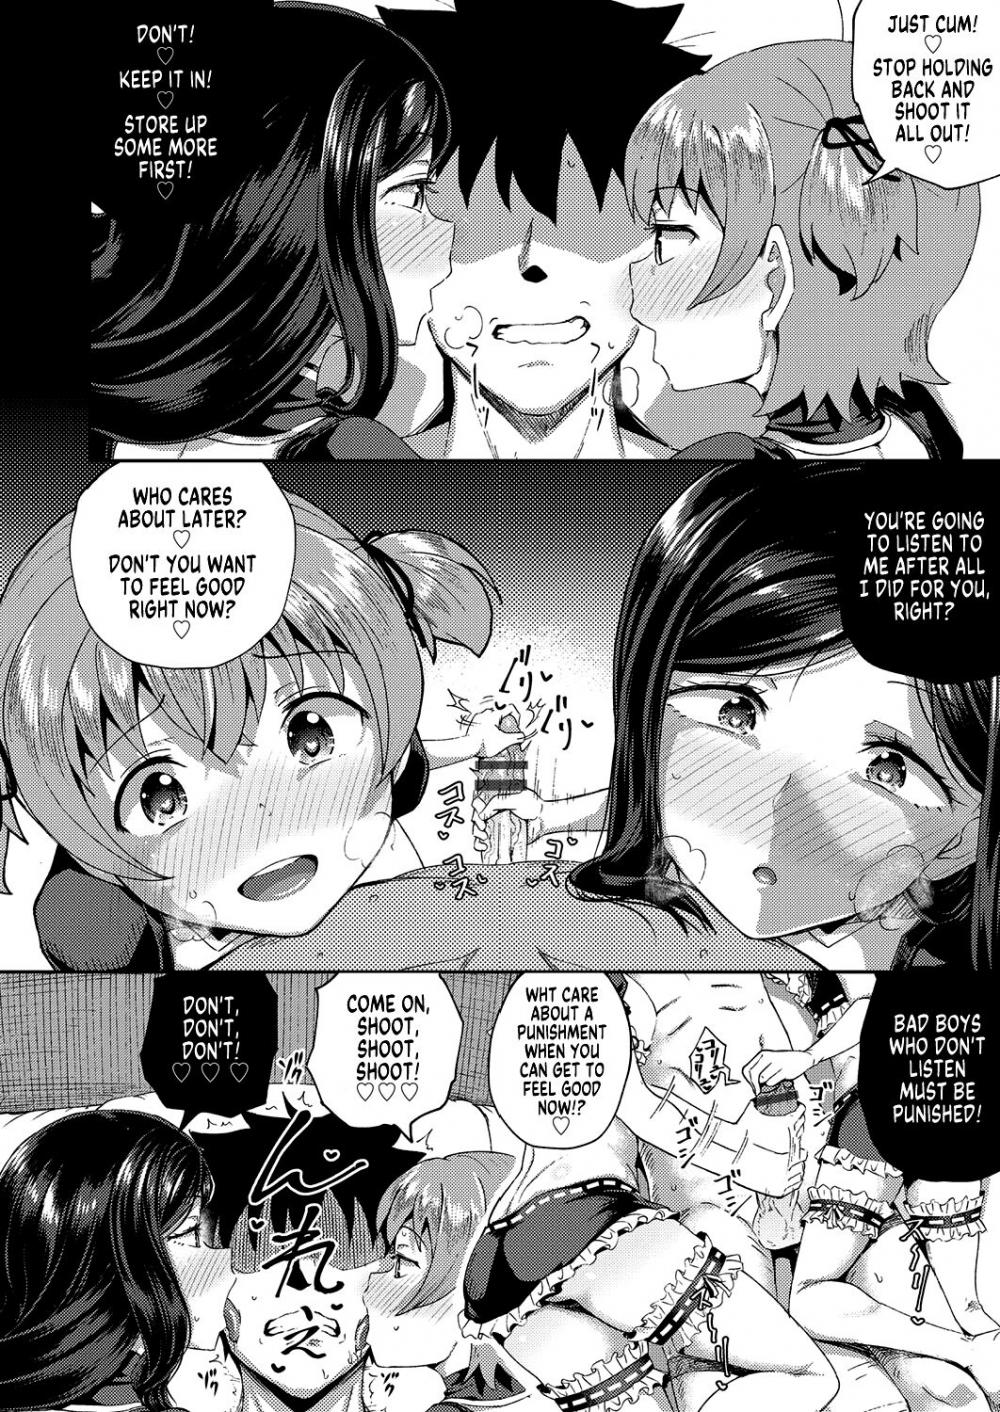 Hentai Manga Comic-My Childhood Friend is my Personal Mouth Maid-v22m-v22m-v22m-Chapter 3-4